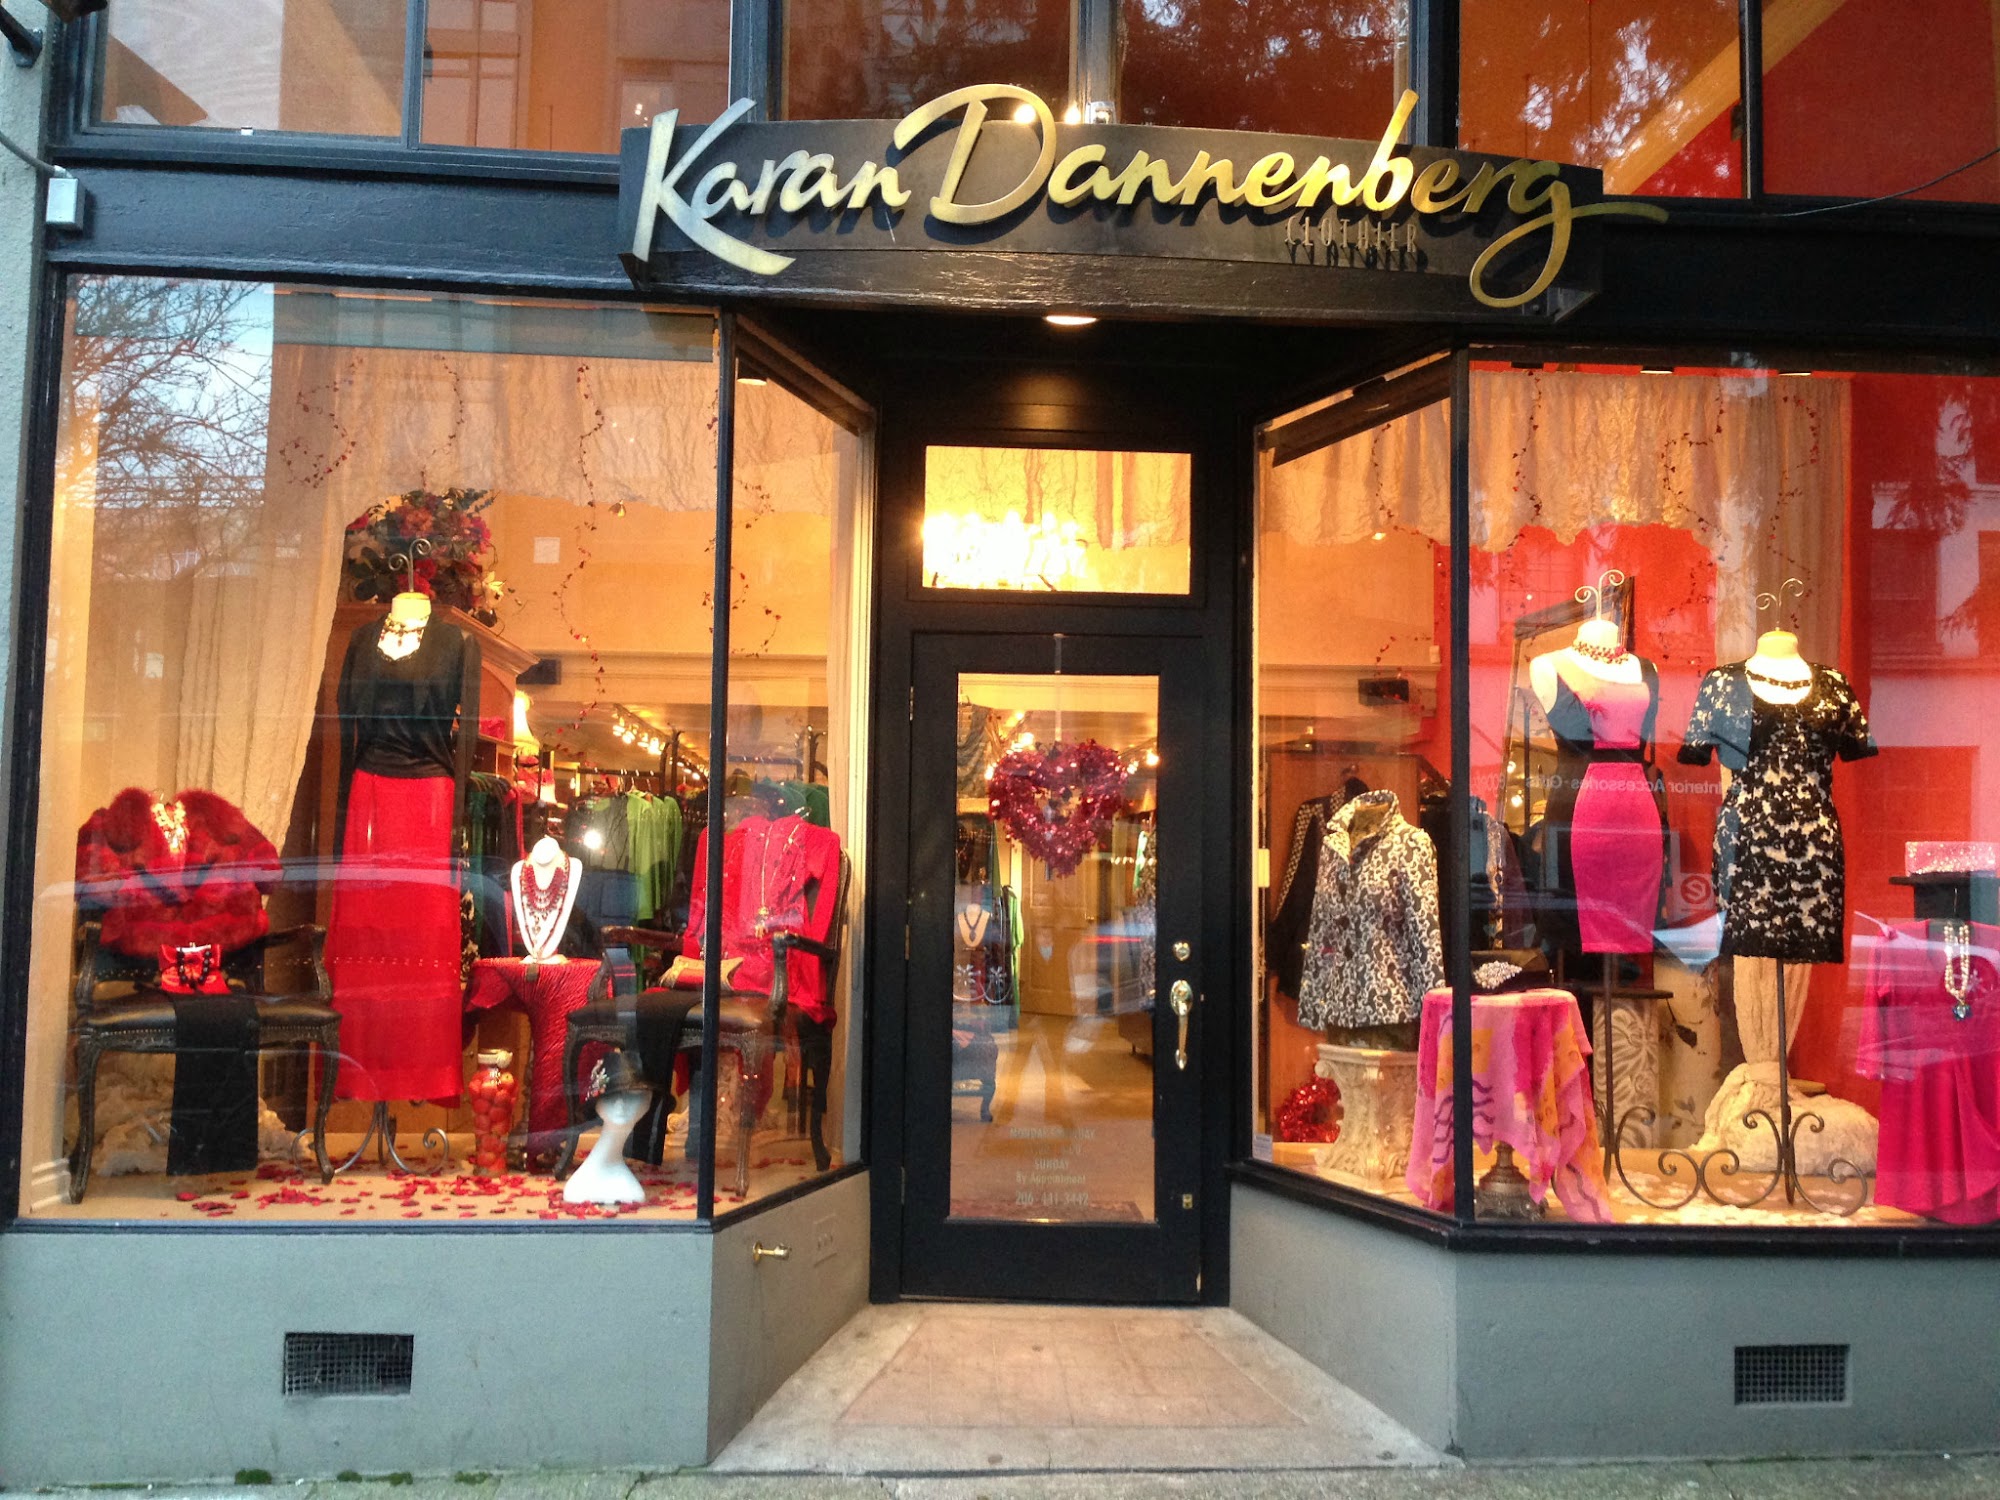 Karan Dannenberg Clothier